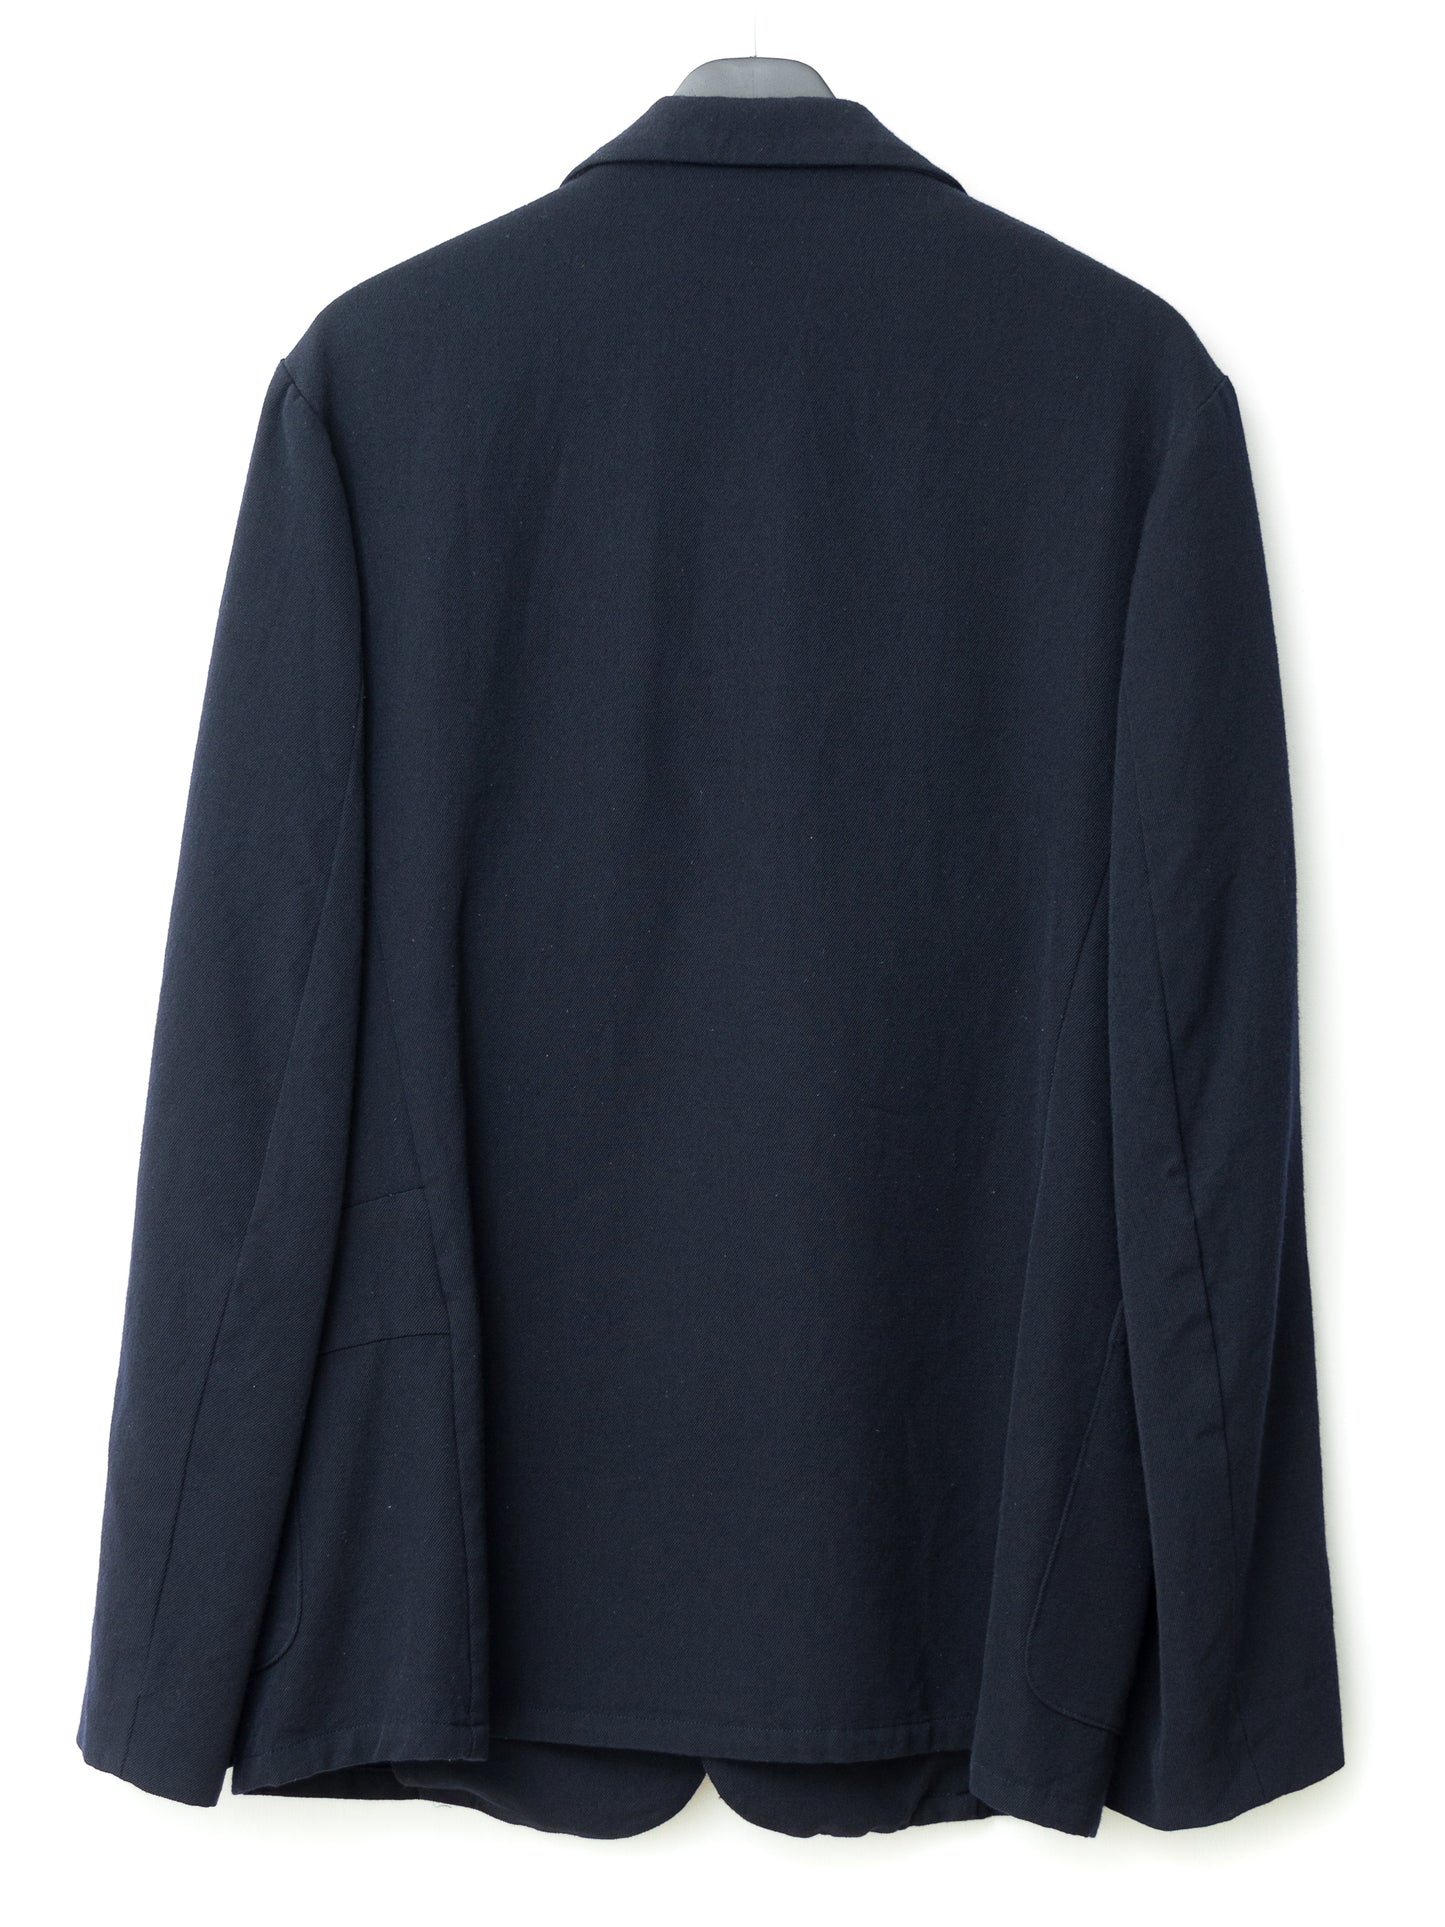 a/w 03 tailored jacket navy ∙ wool ∙ medium